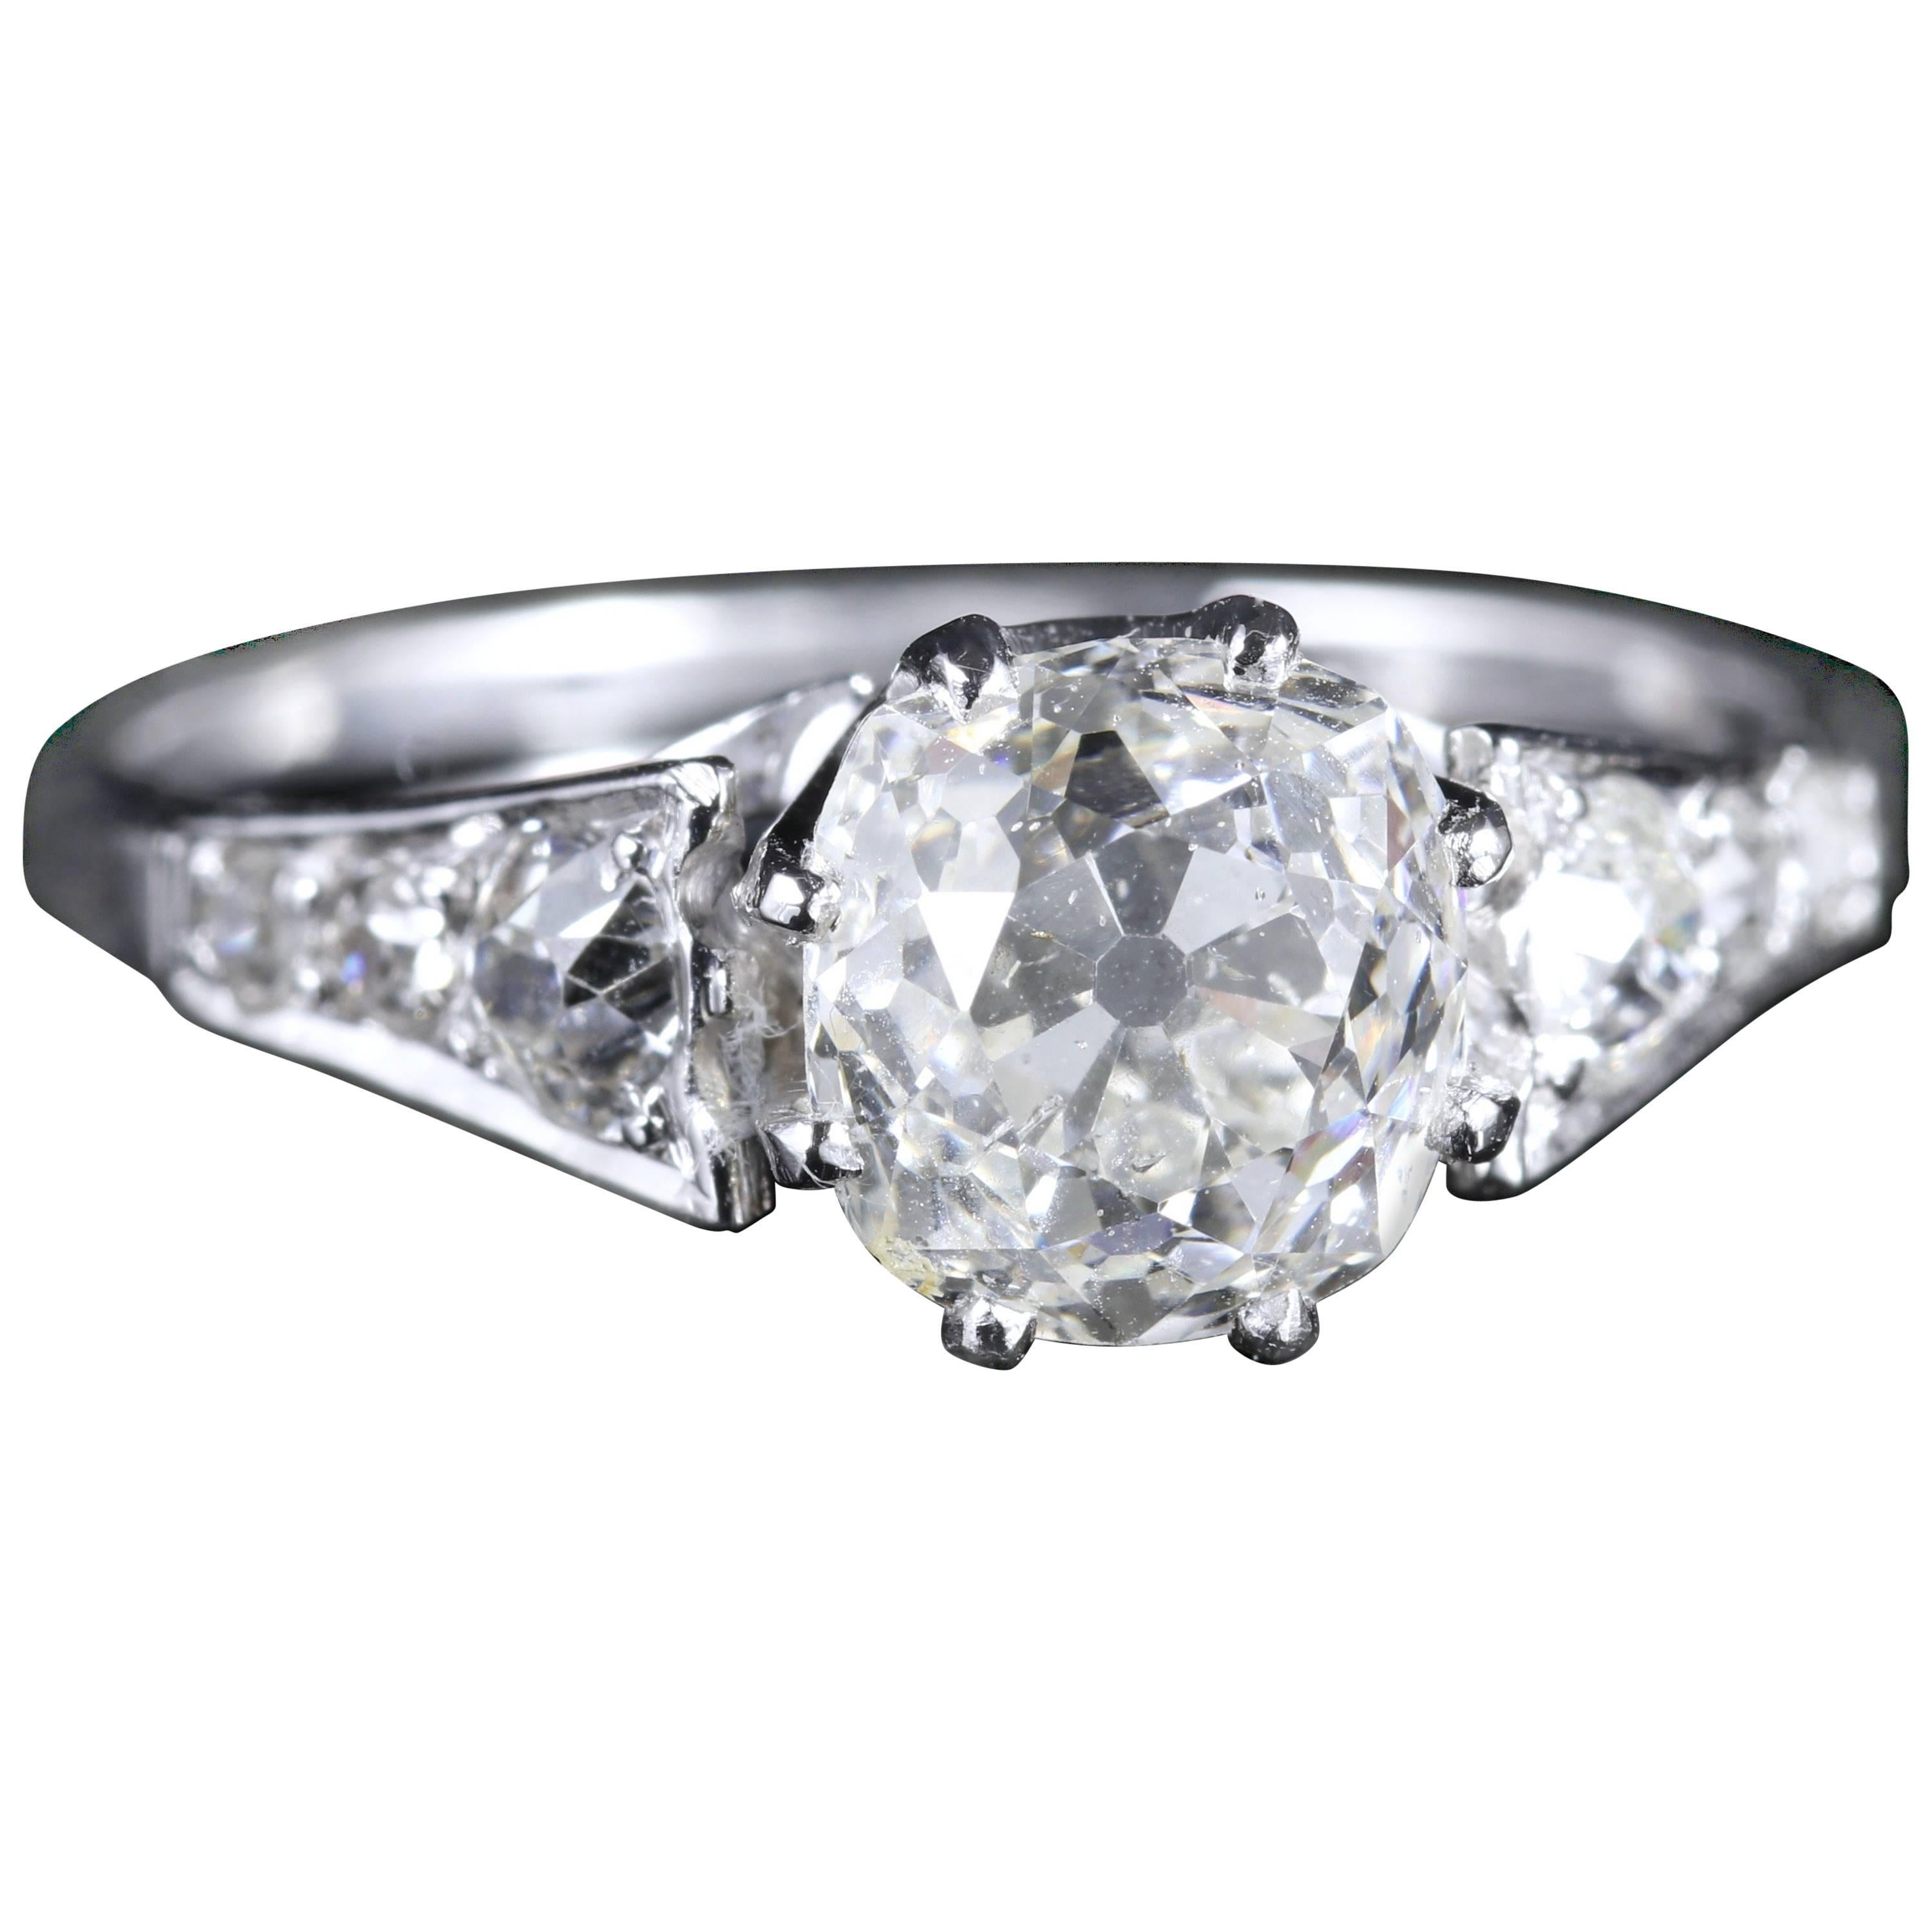 Antique Edwardian 2.47 Carat Diamond Solitaire Engagement Ring